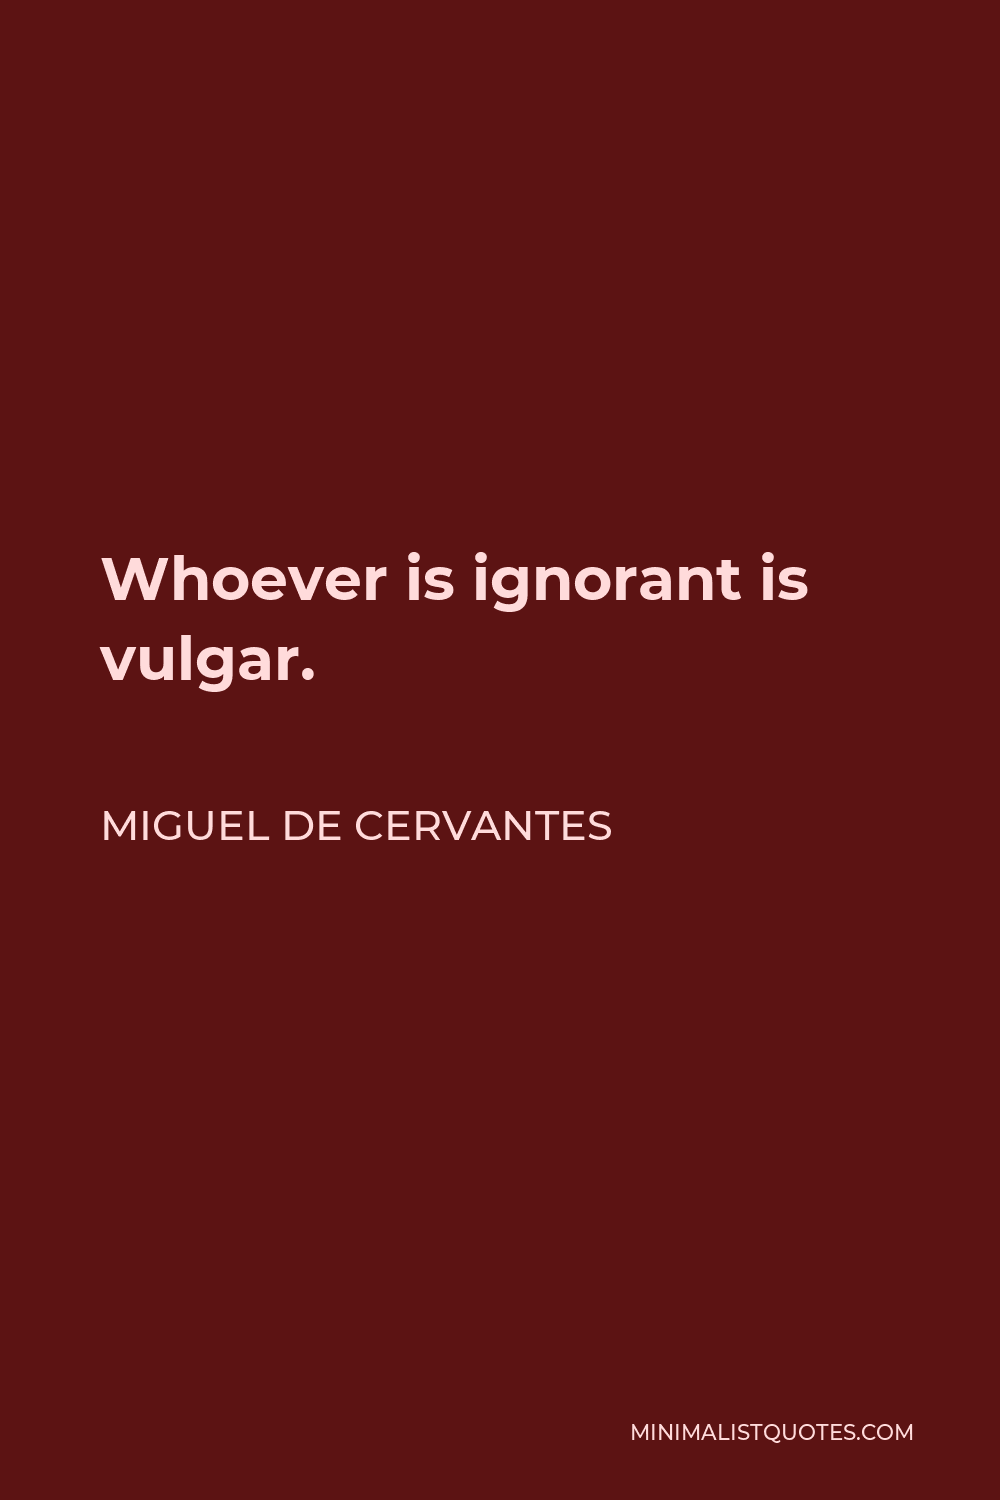 Miguel de Cervantes Quote - Whoever is ignorant is vulgar.